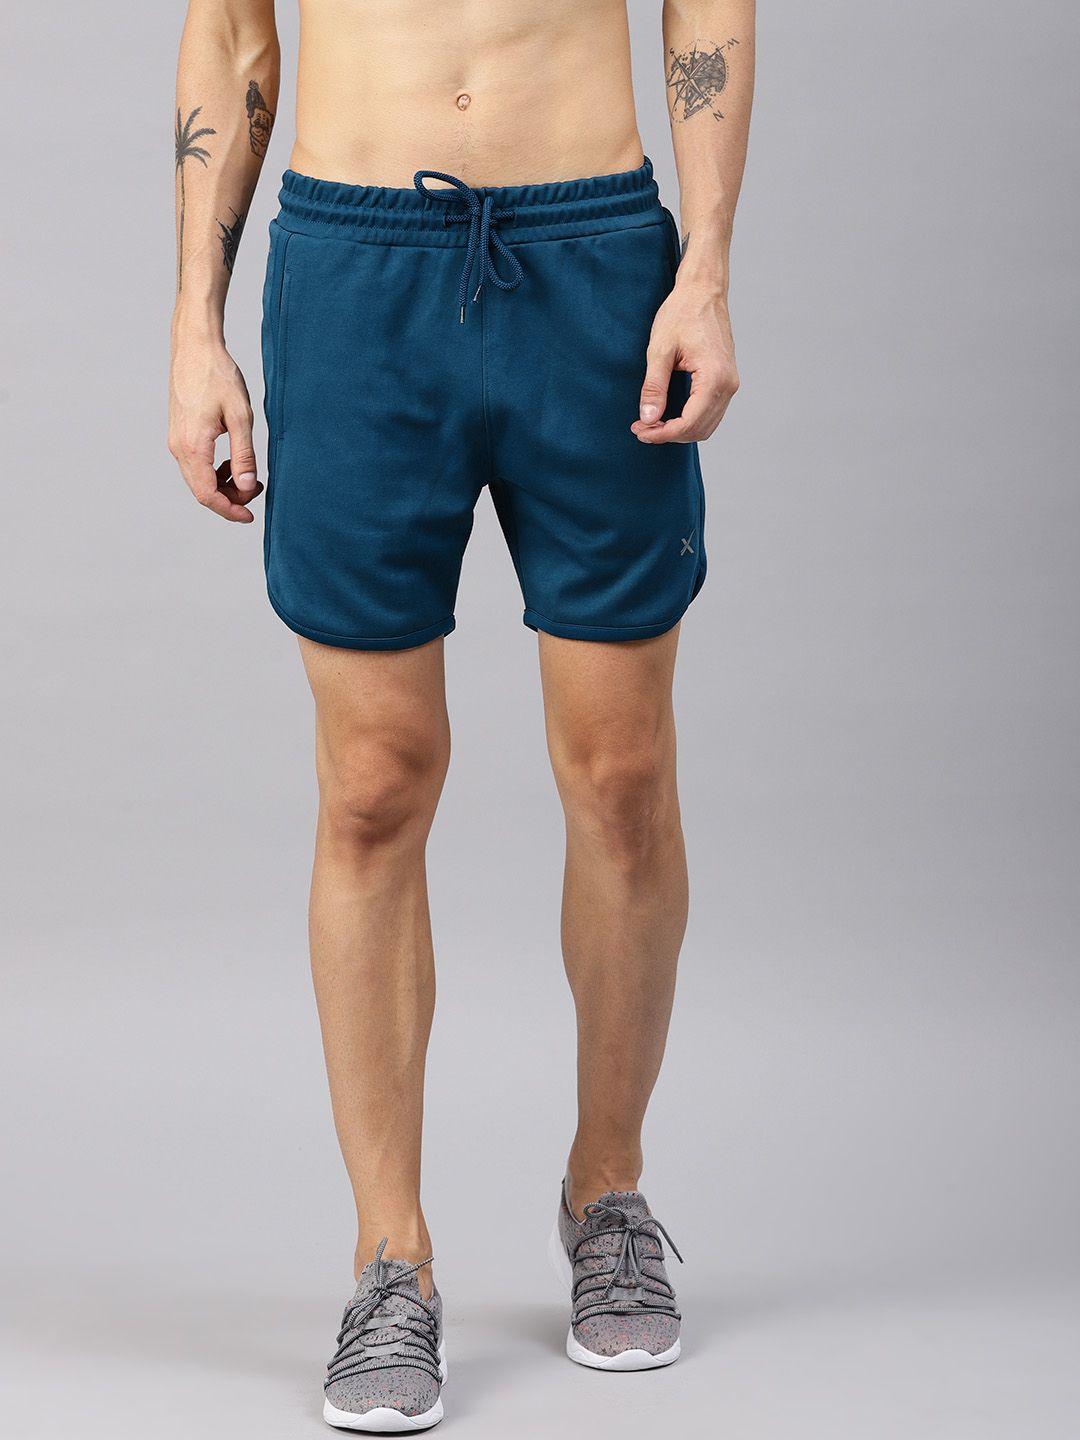 hrx by hrithik roshan men teal blue solid regular fit rapid-dry sports shorts